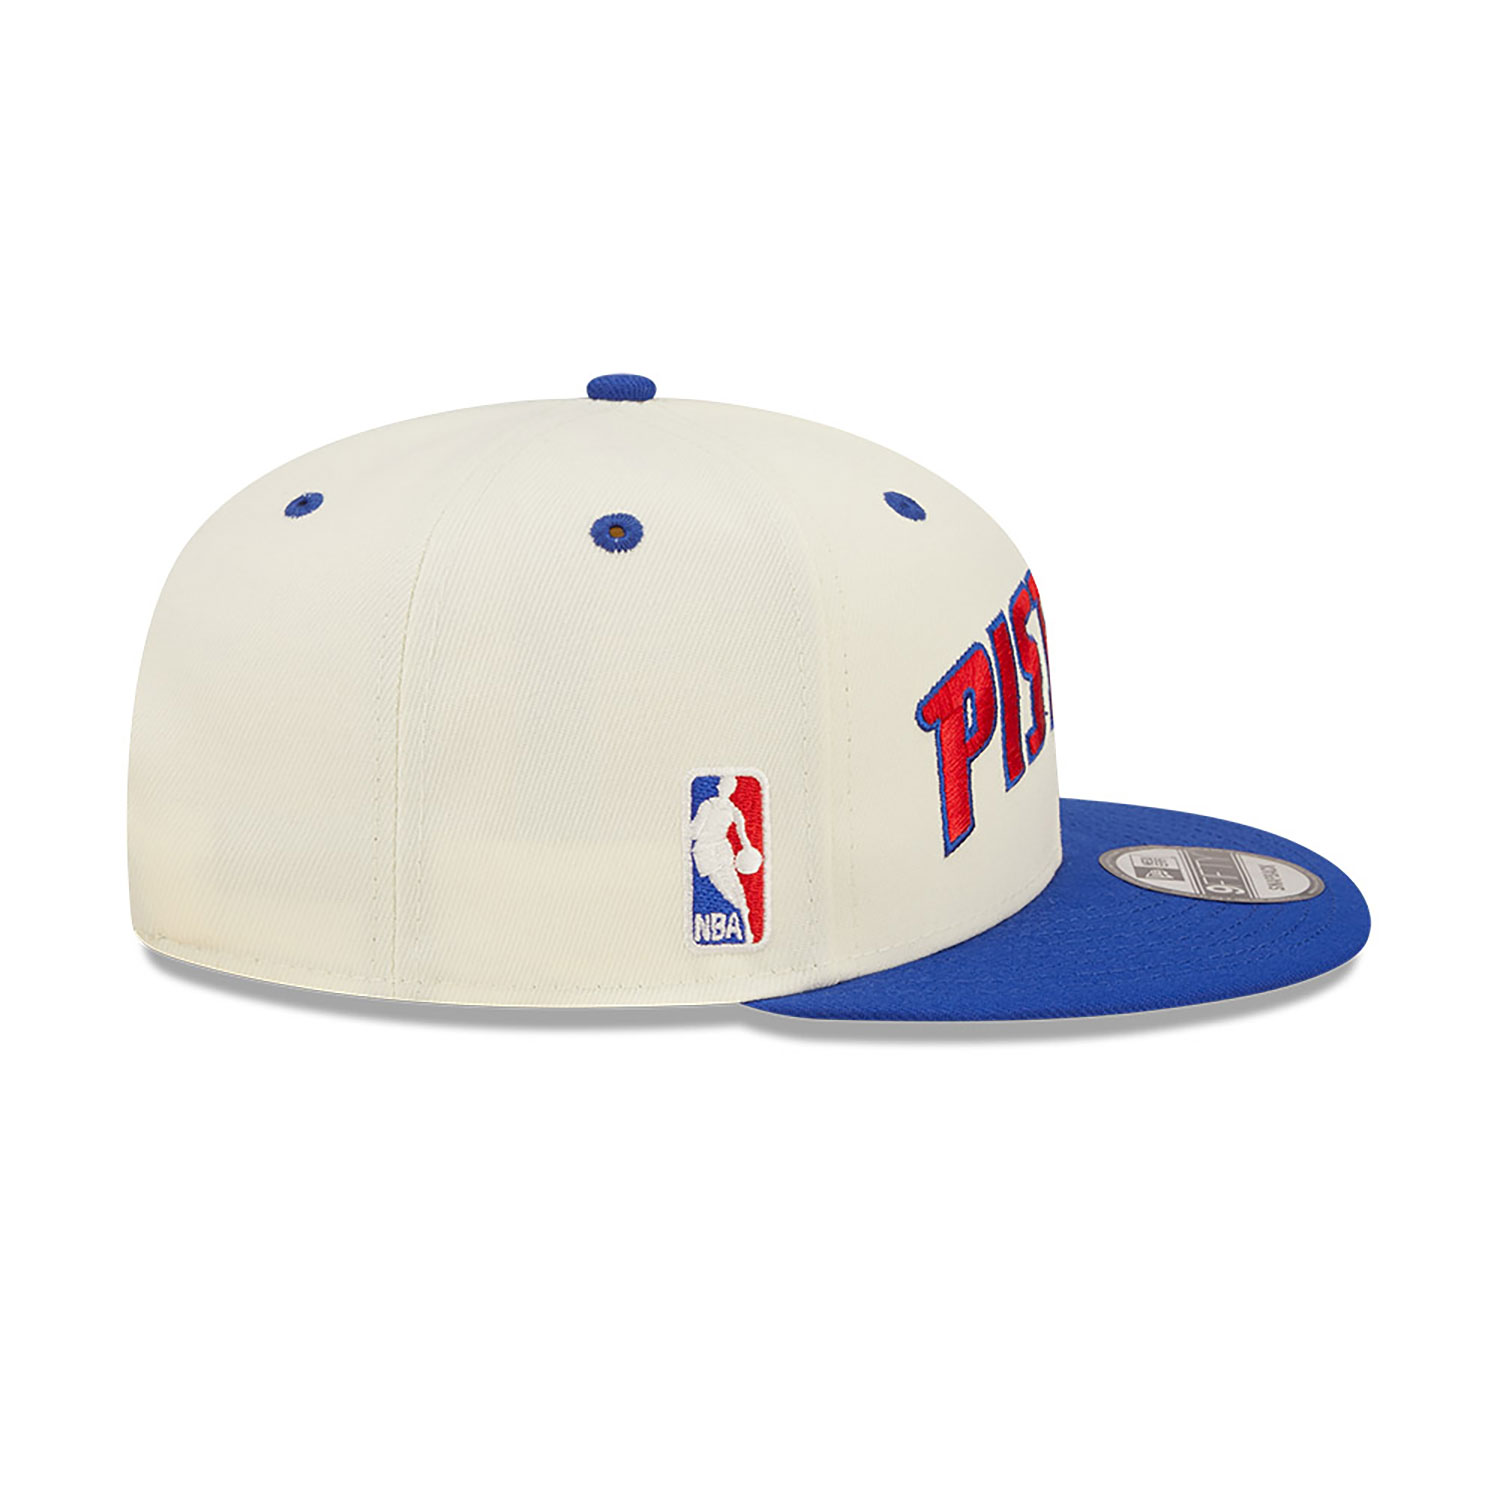 Detroit Pistons Blend White 9FIFTY Snapback Cap